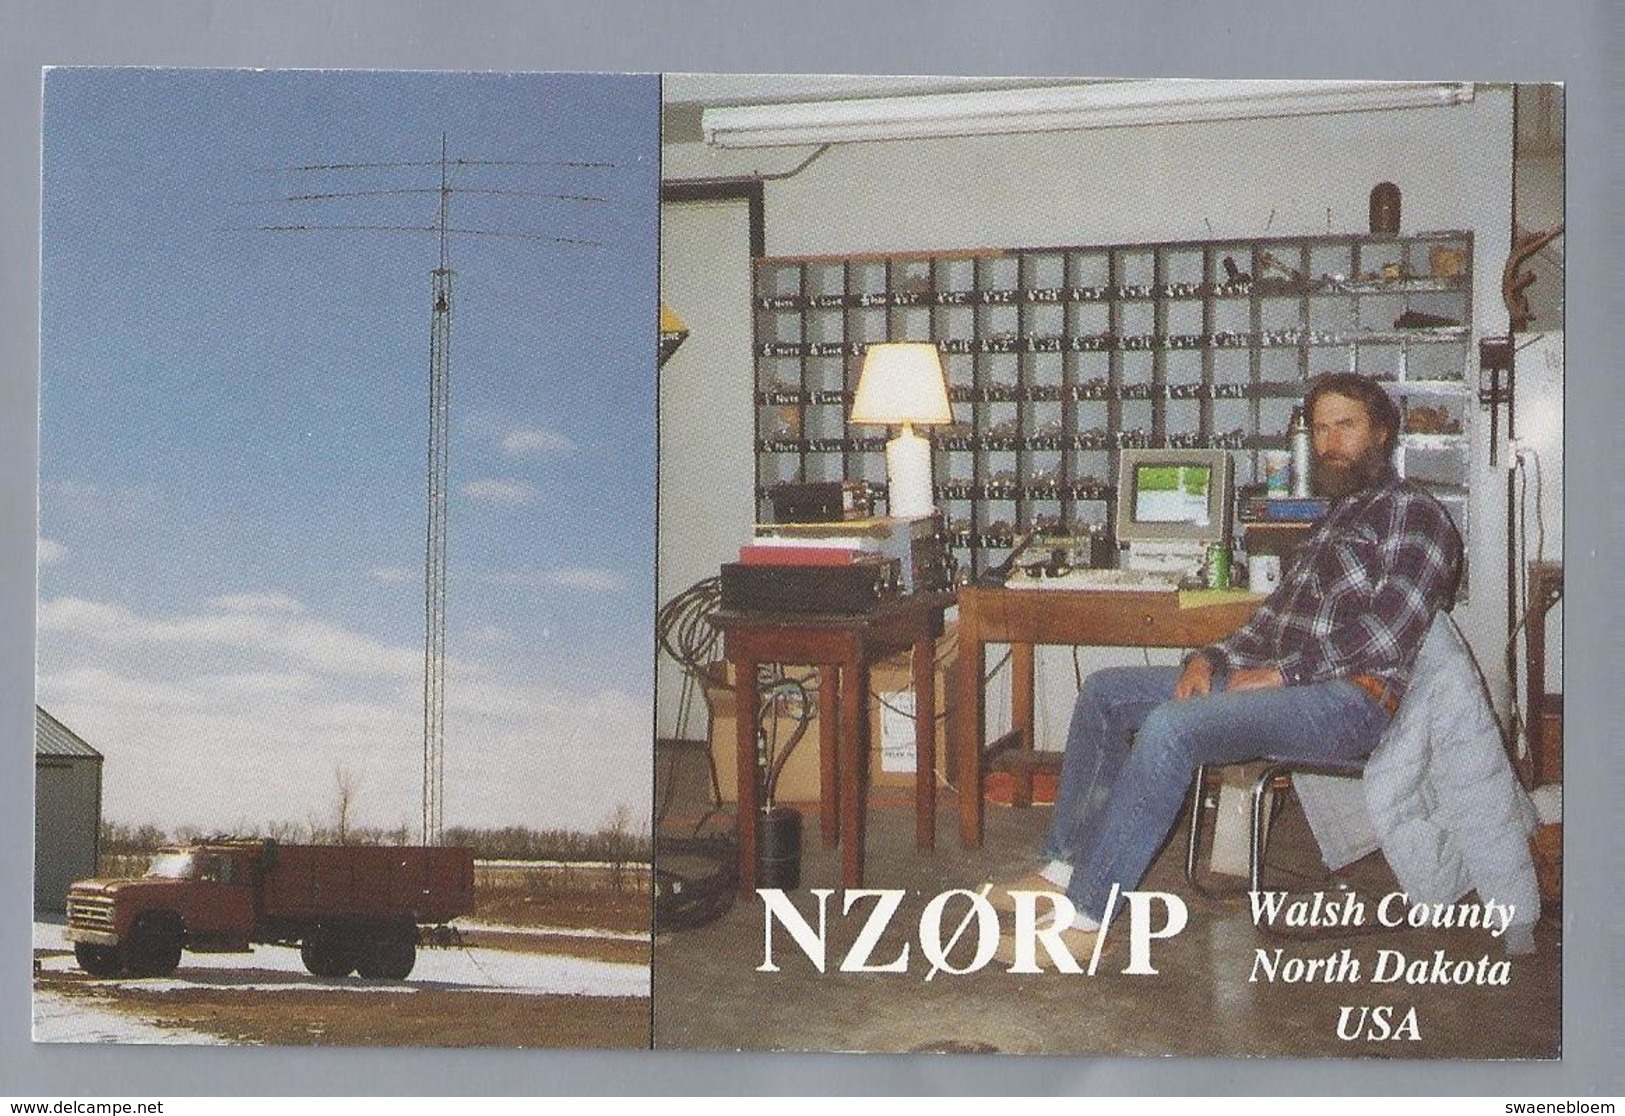 US.- QSL KAART. CARD. NZOR/P Walsh County, Warsaw, North Dakota, USA. Op: David Willis, Thief River Falls. - Radio Amateur